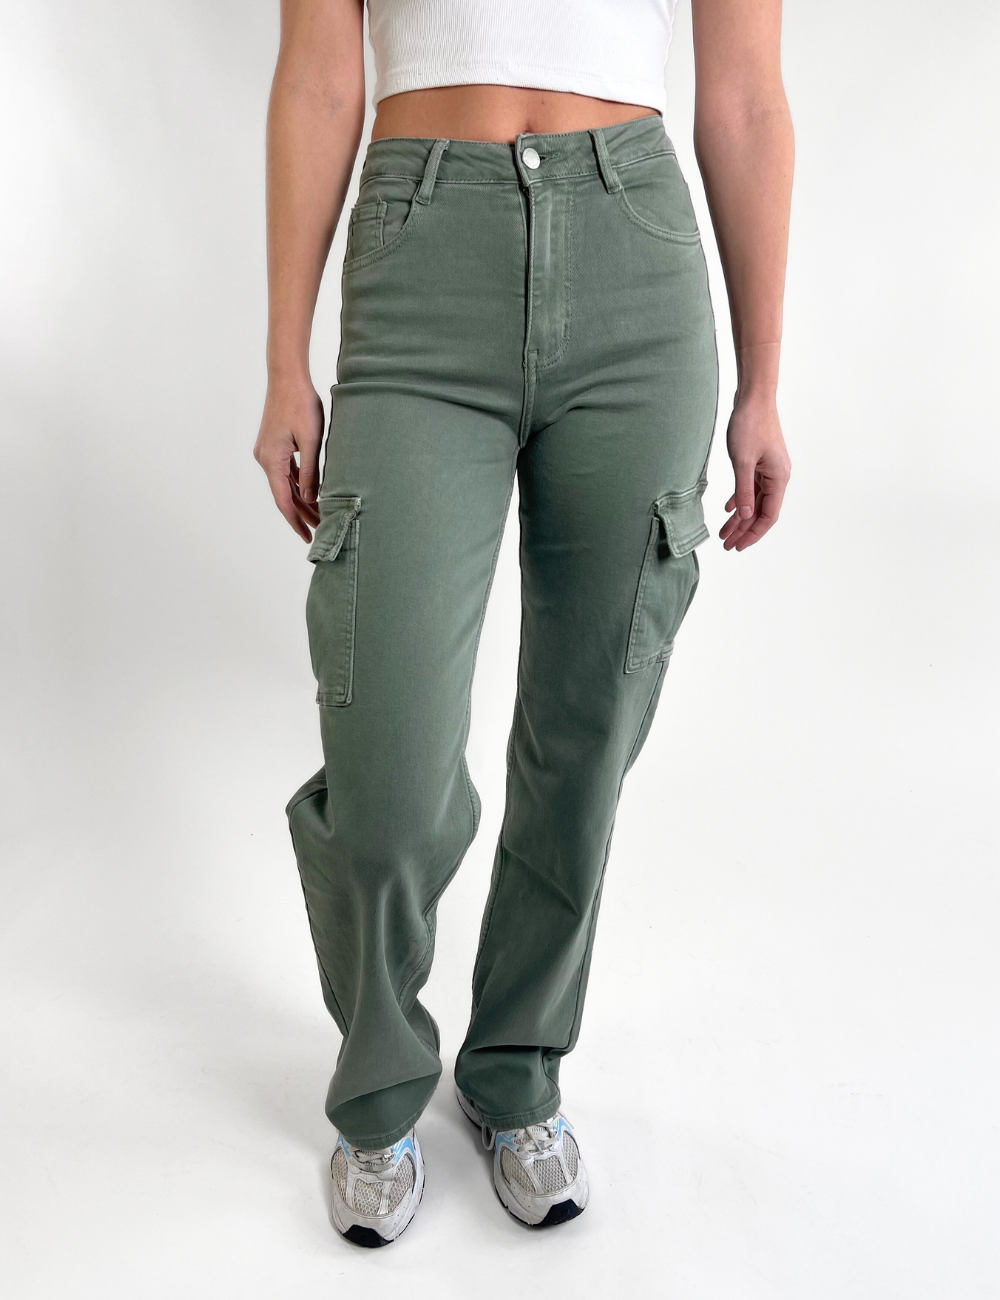 Army groene tall cargo jeans